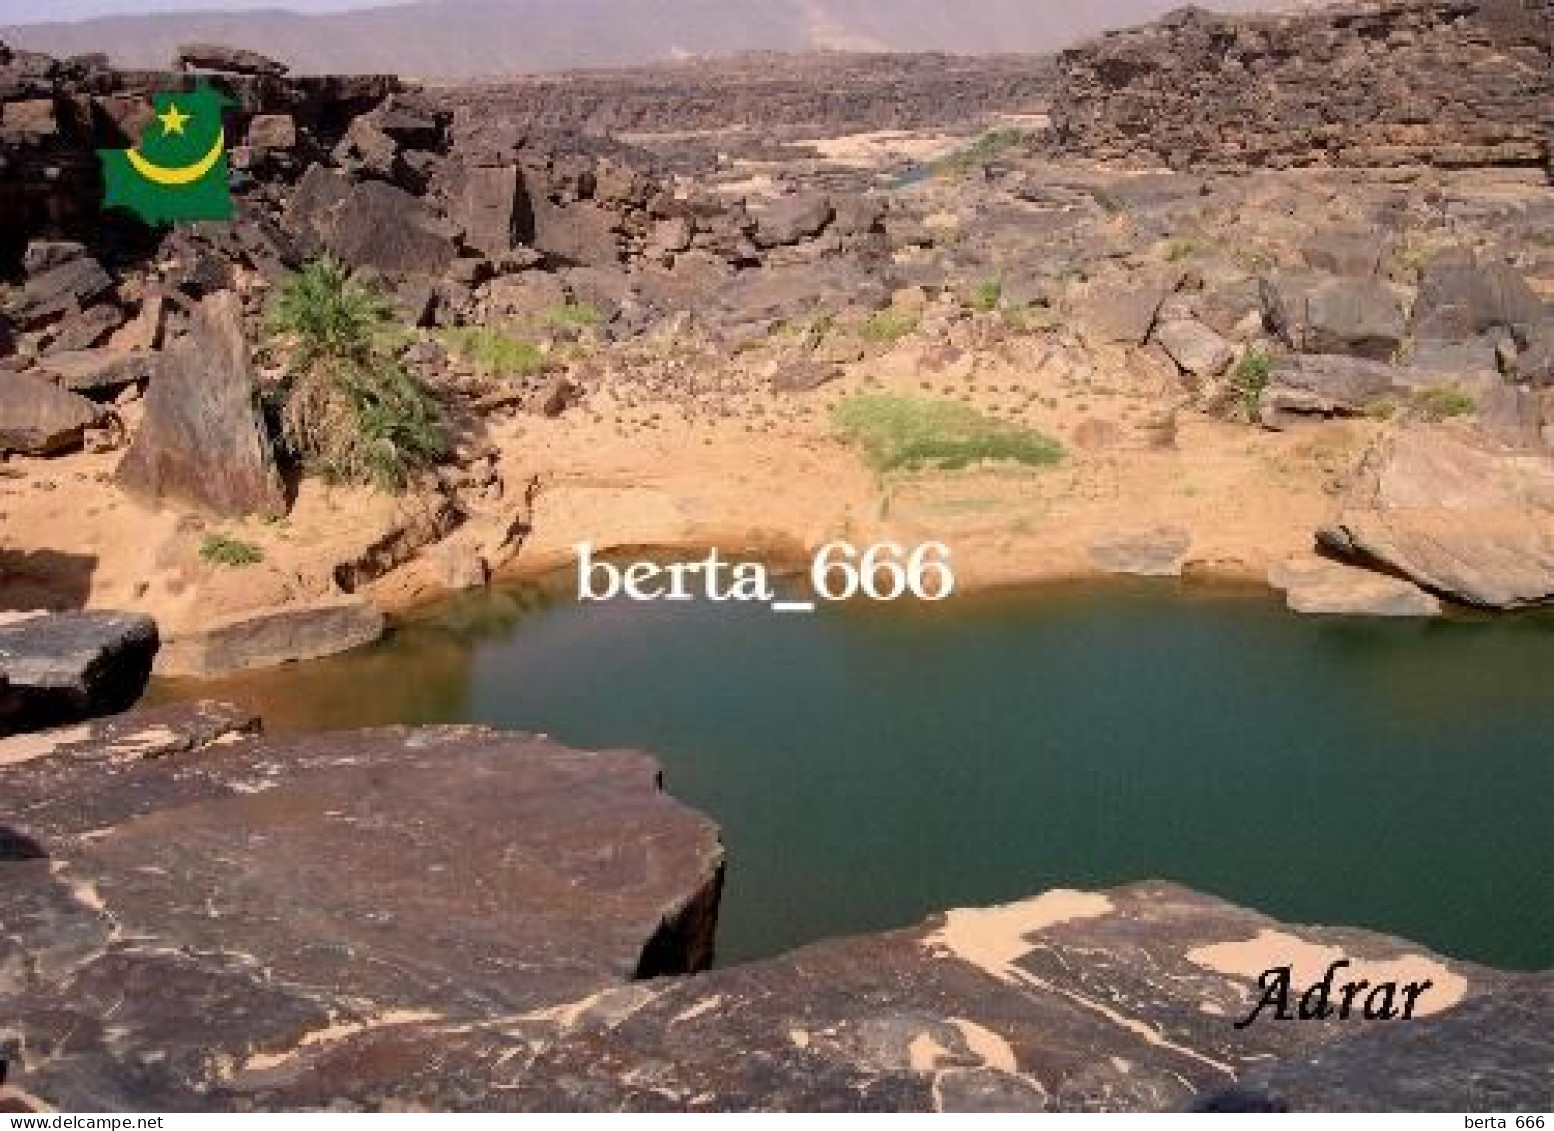 Mauritania Adrar Plateau Landscape New Postcard - Mauritanie